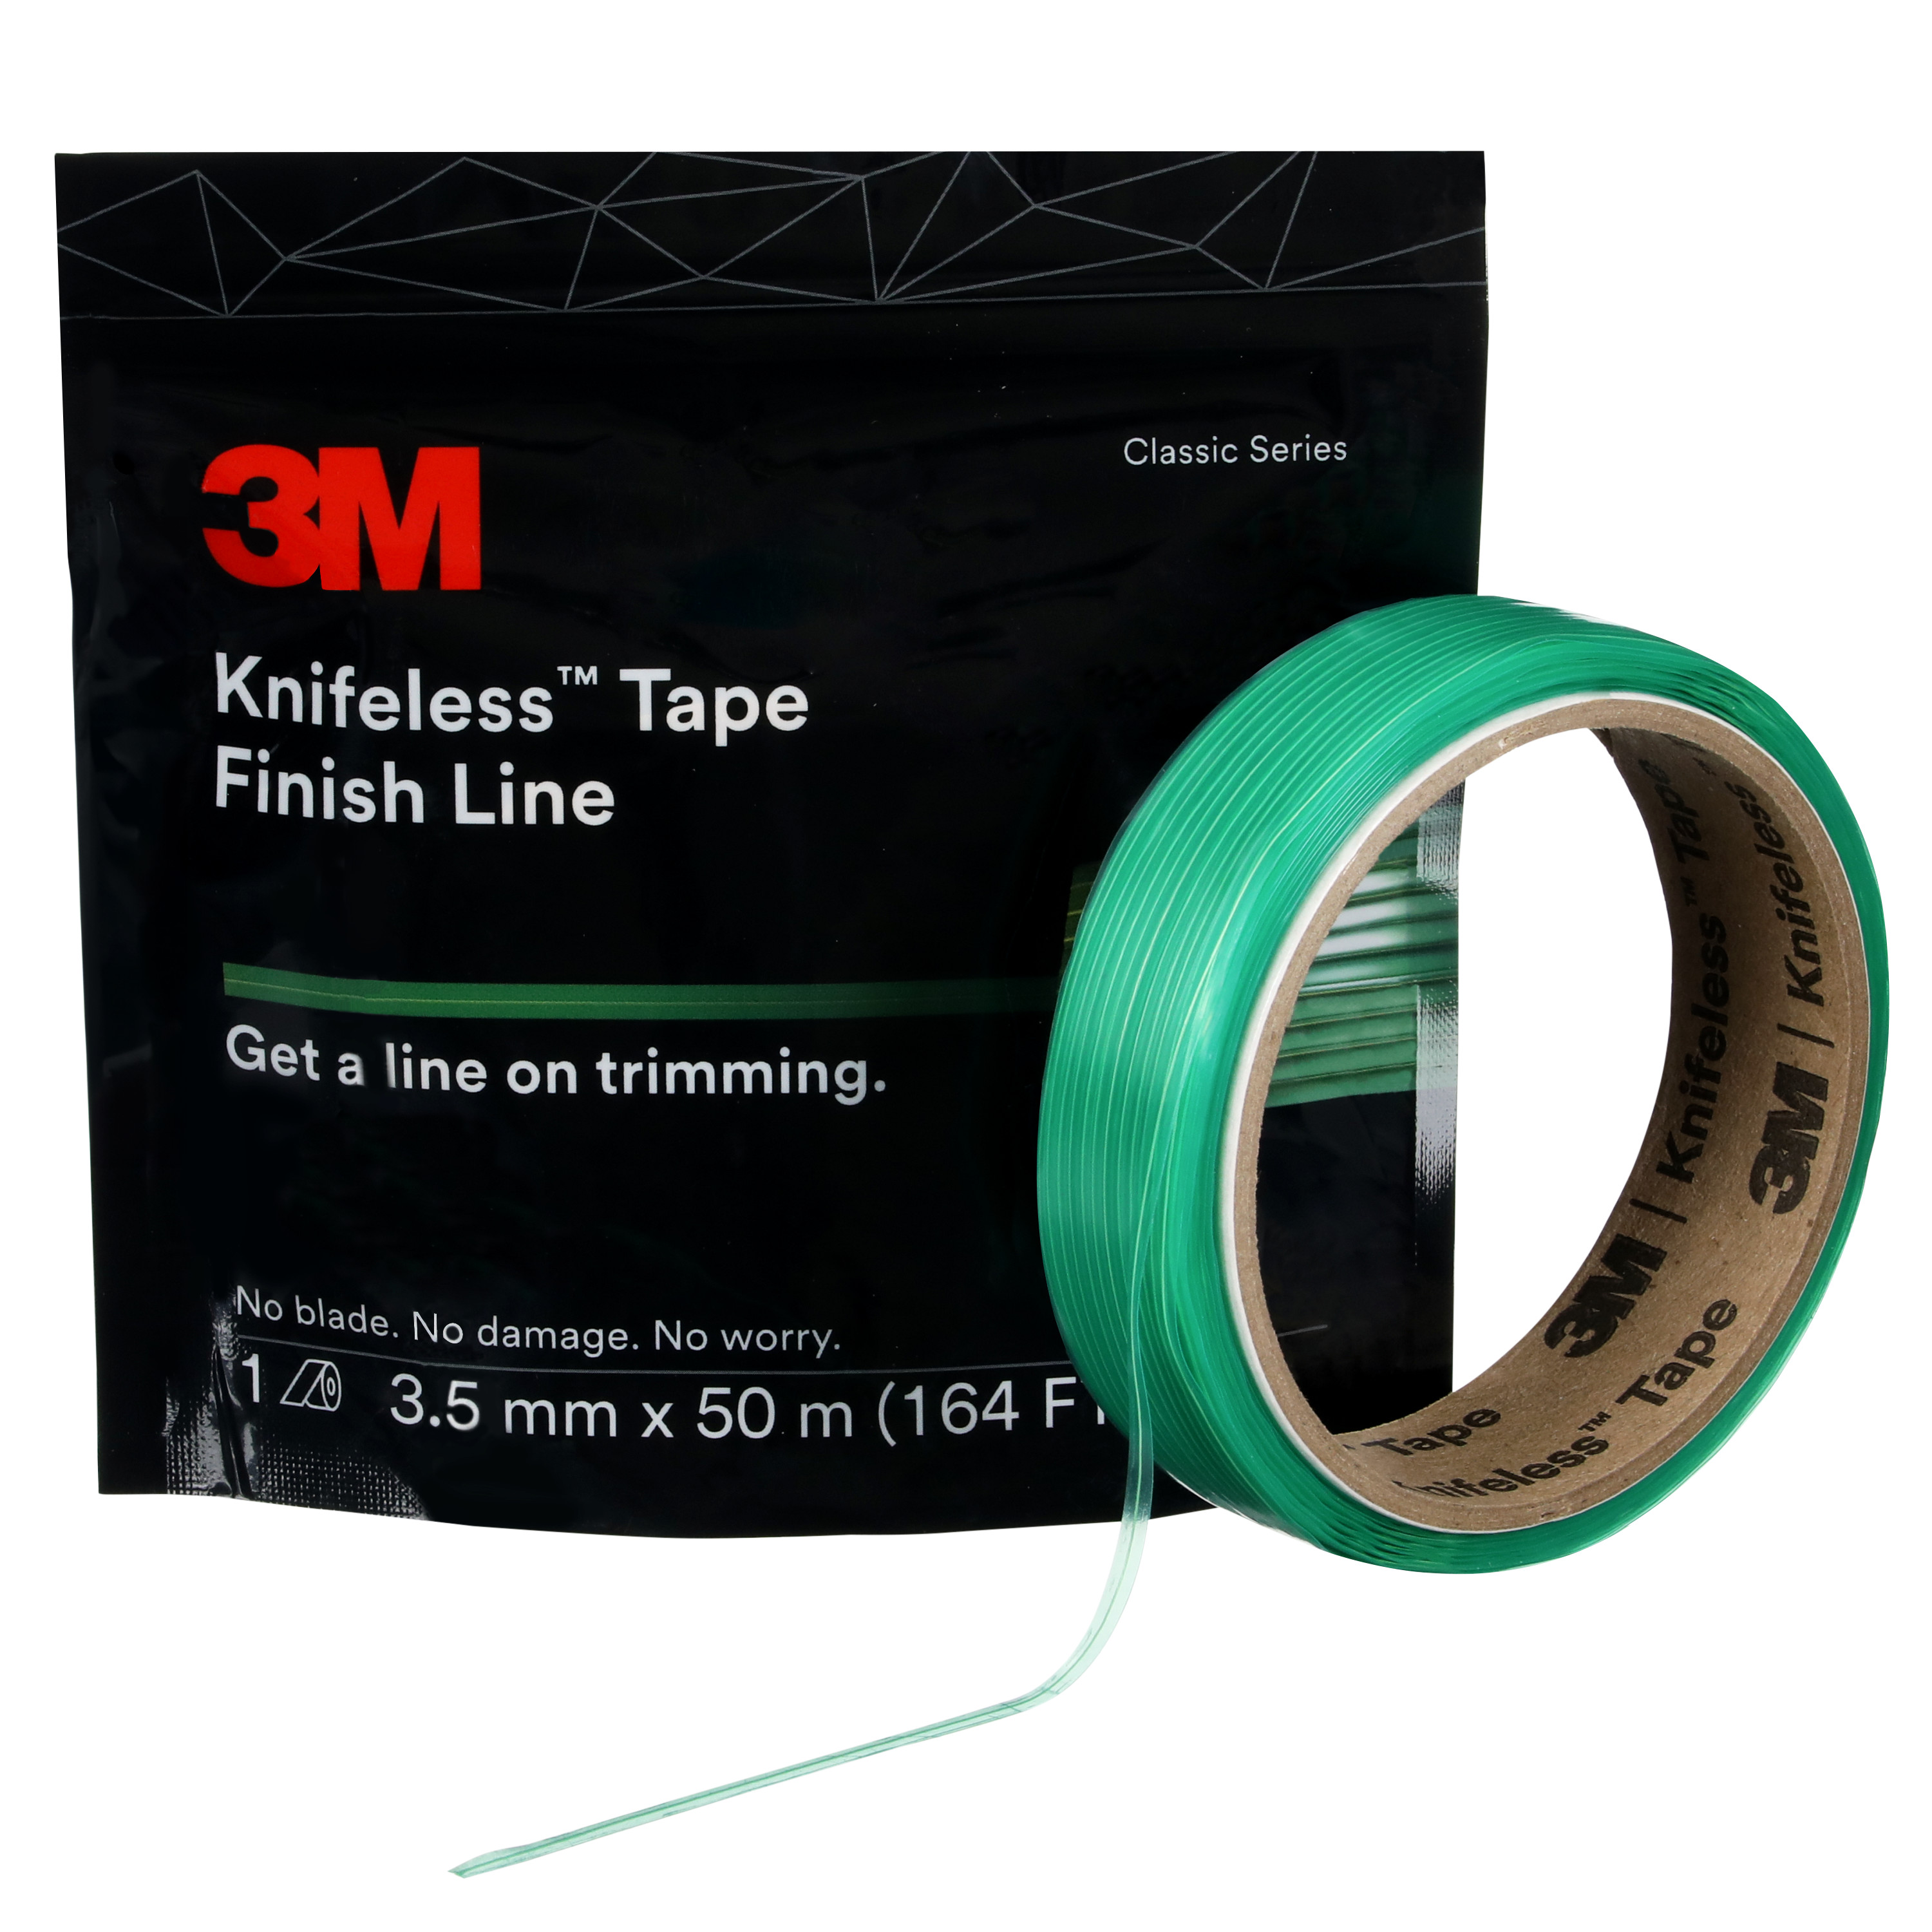 SKU 7100104843 | 3M™ Knifeless™ Tape Finish Line KTS-FL1